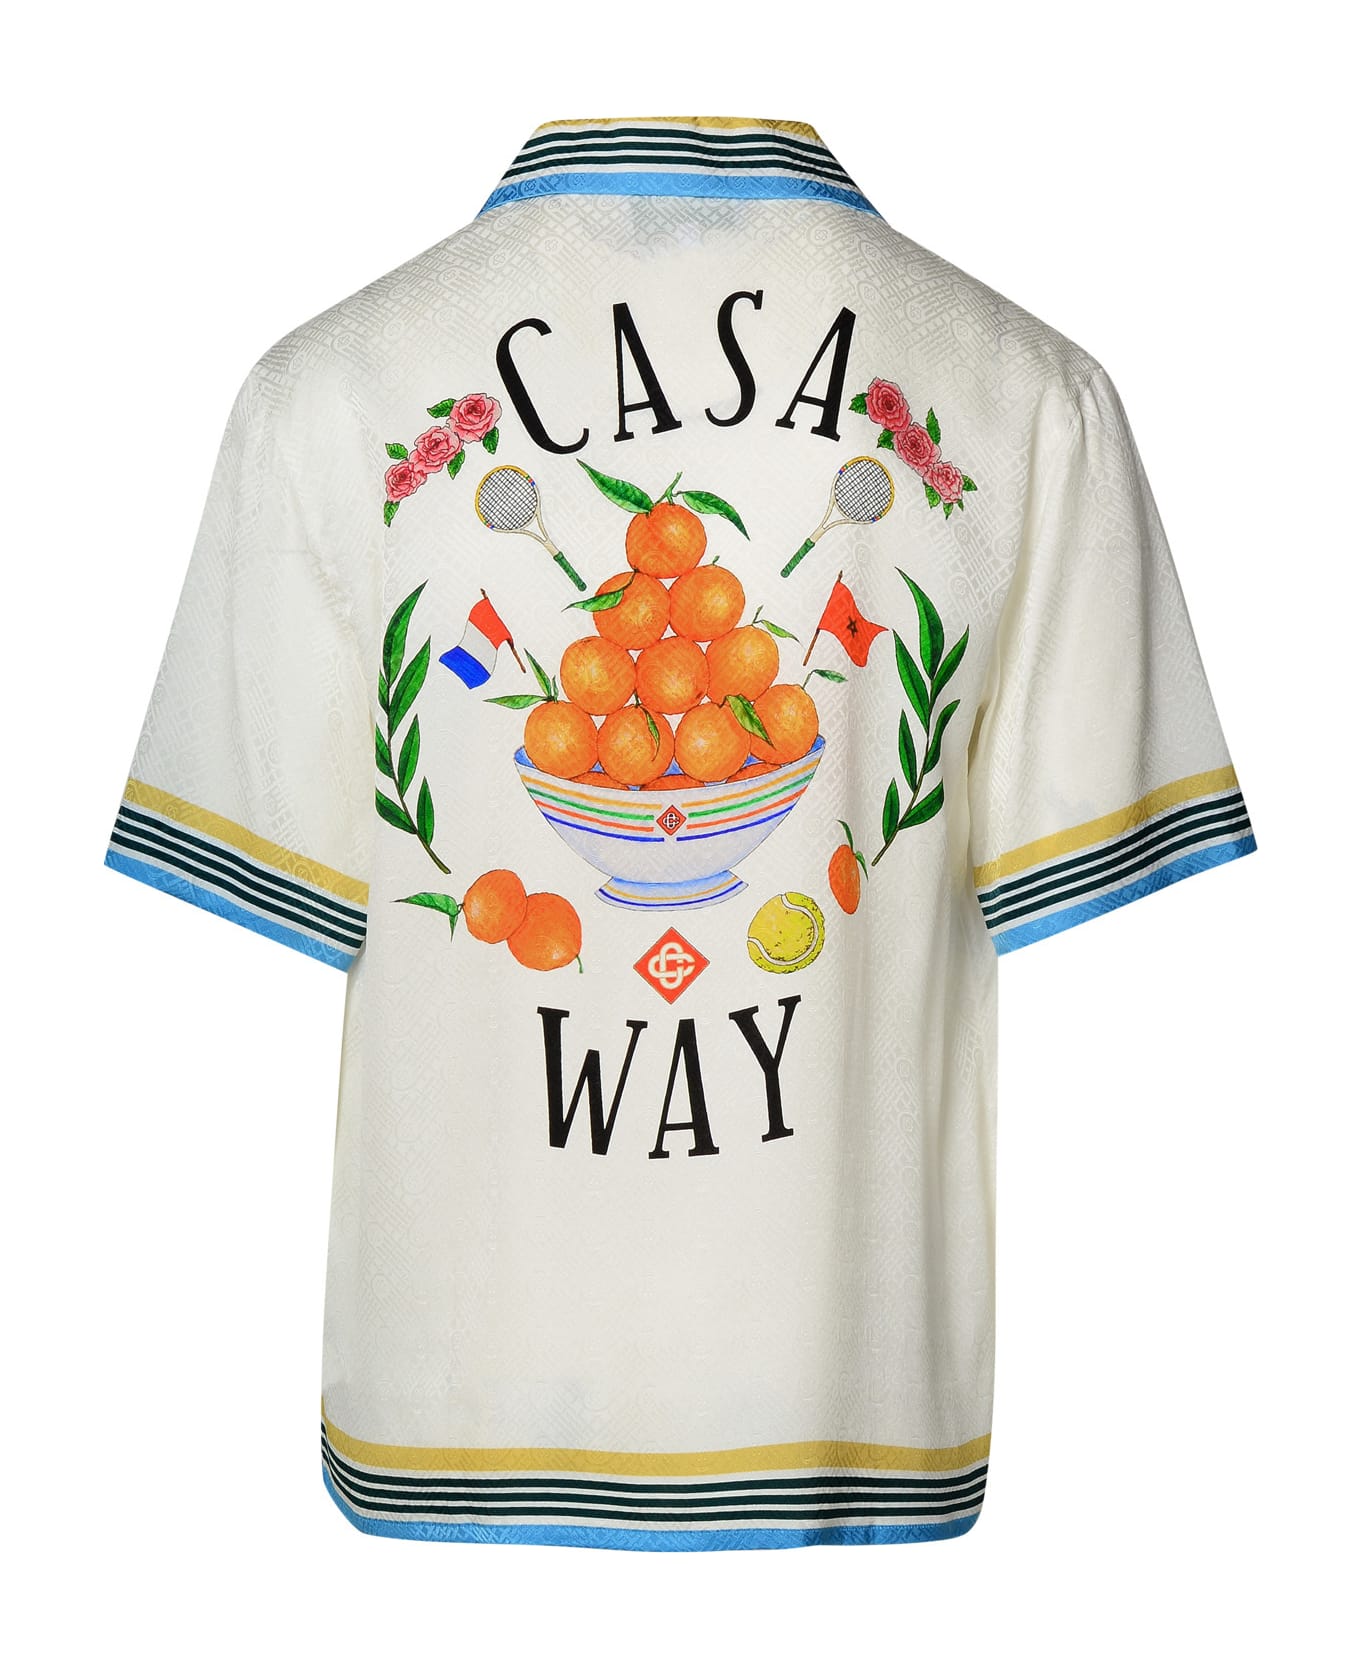 Casablanca White Silk Shirt - Casa Way